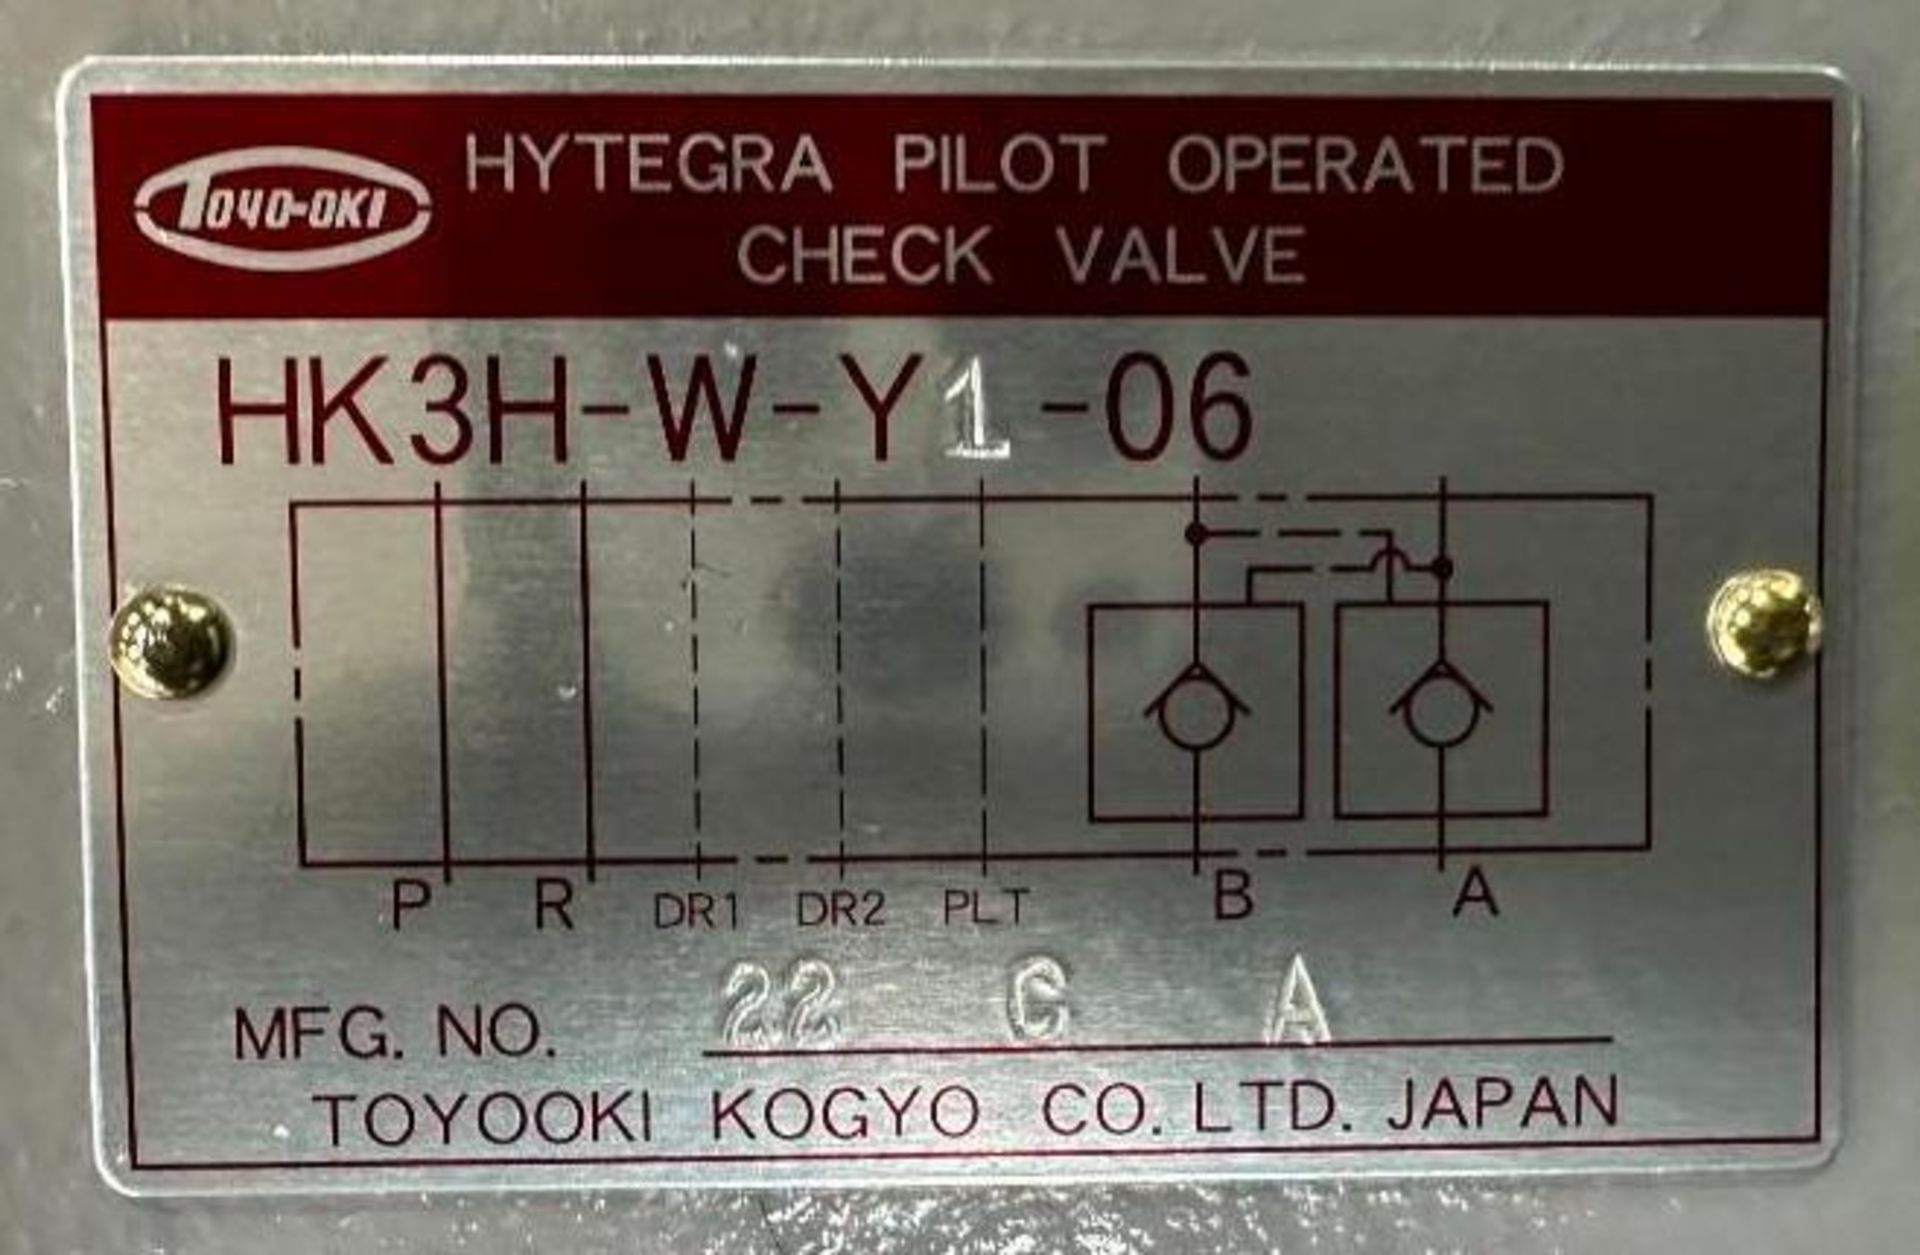 Toyo-oki #HK3H-W-Y1-06 Hytegra Pilot Operated Check Valve - Image 5 of 5